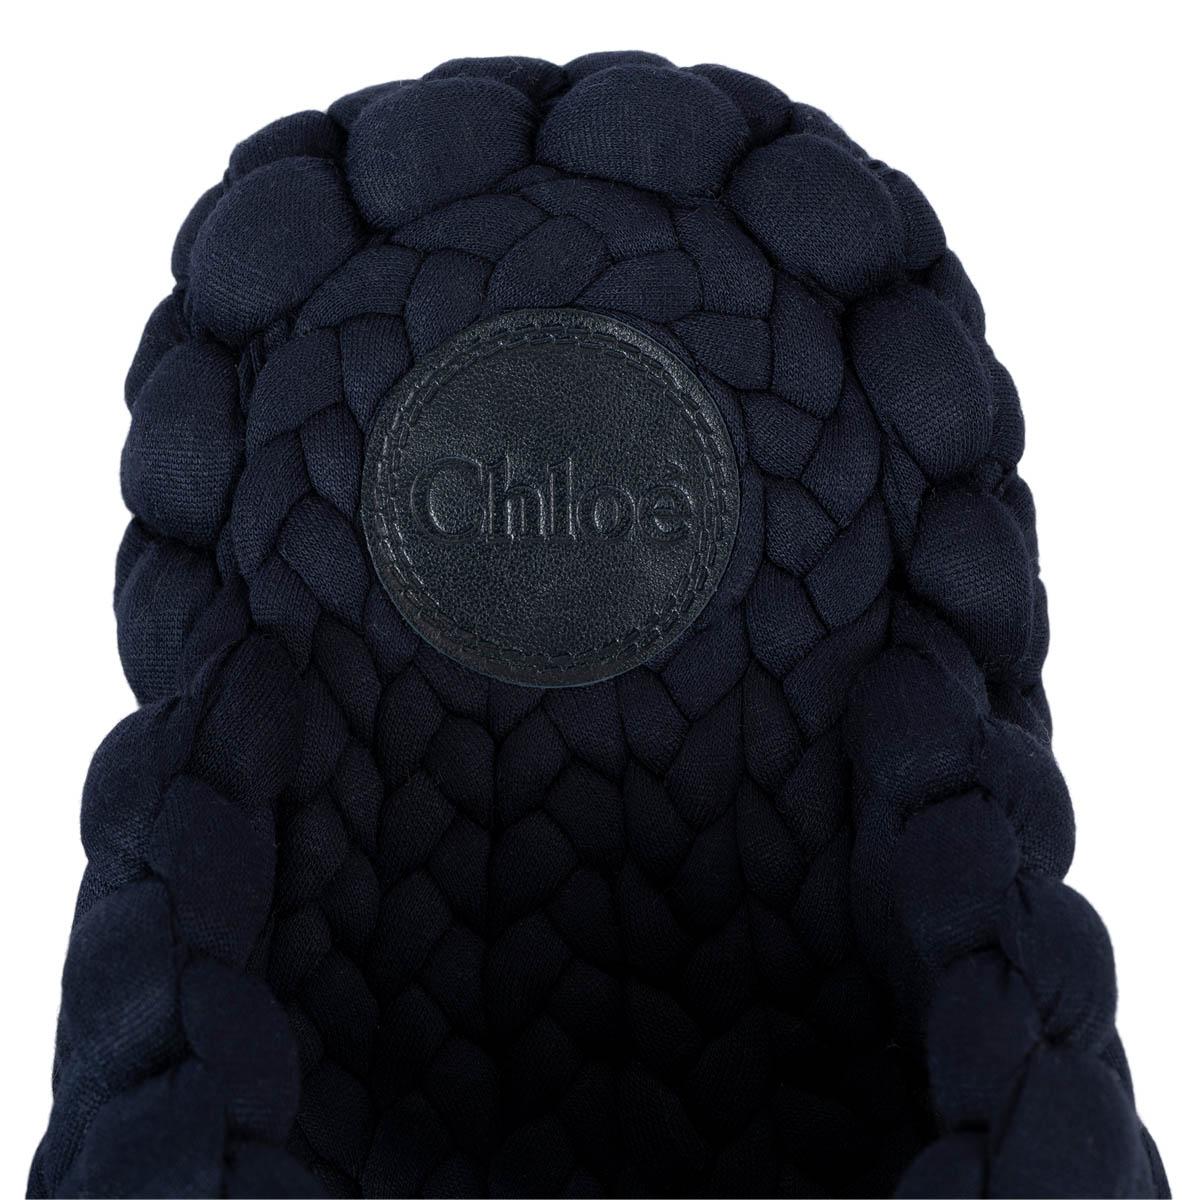 CHLOE navy blue jersey KAMY BRAIDED PLATFORM Slides Sandals Shoes 37 For Sale 3